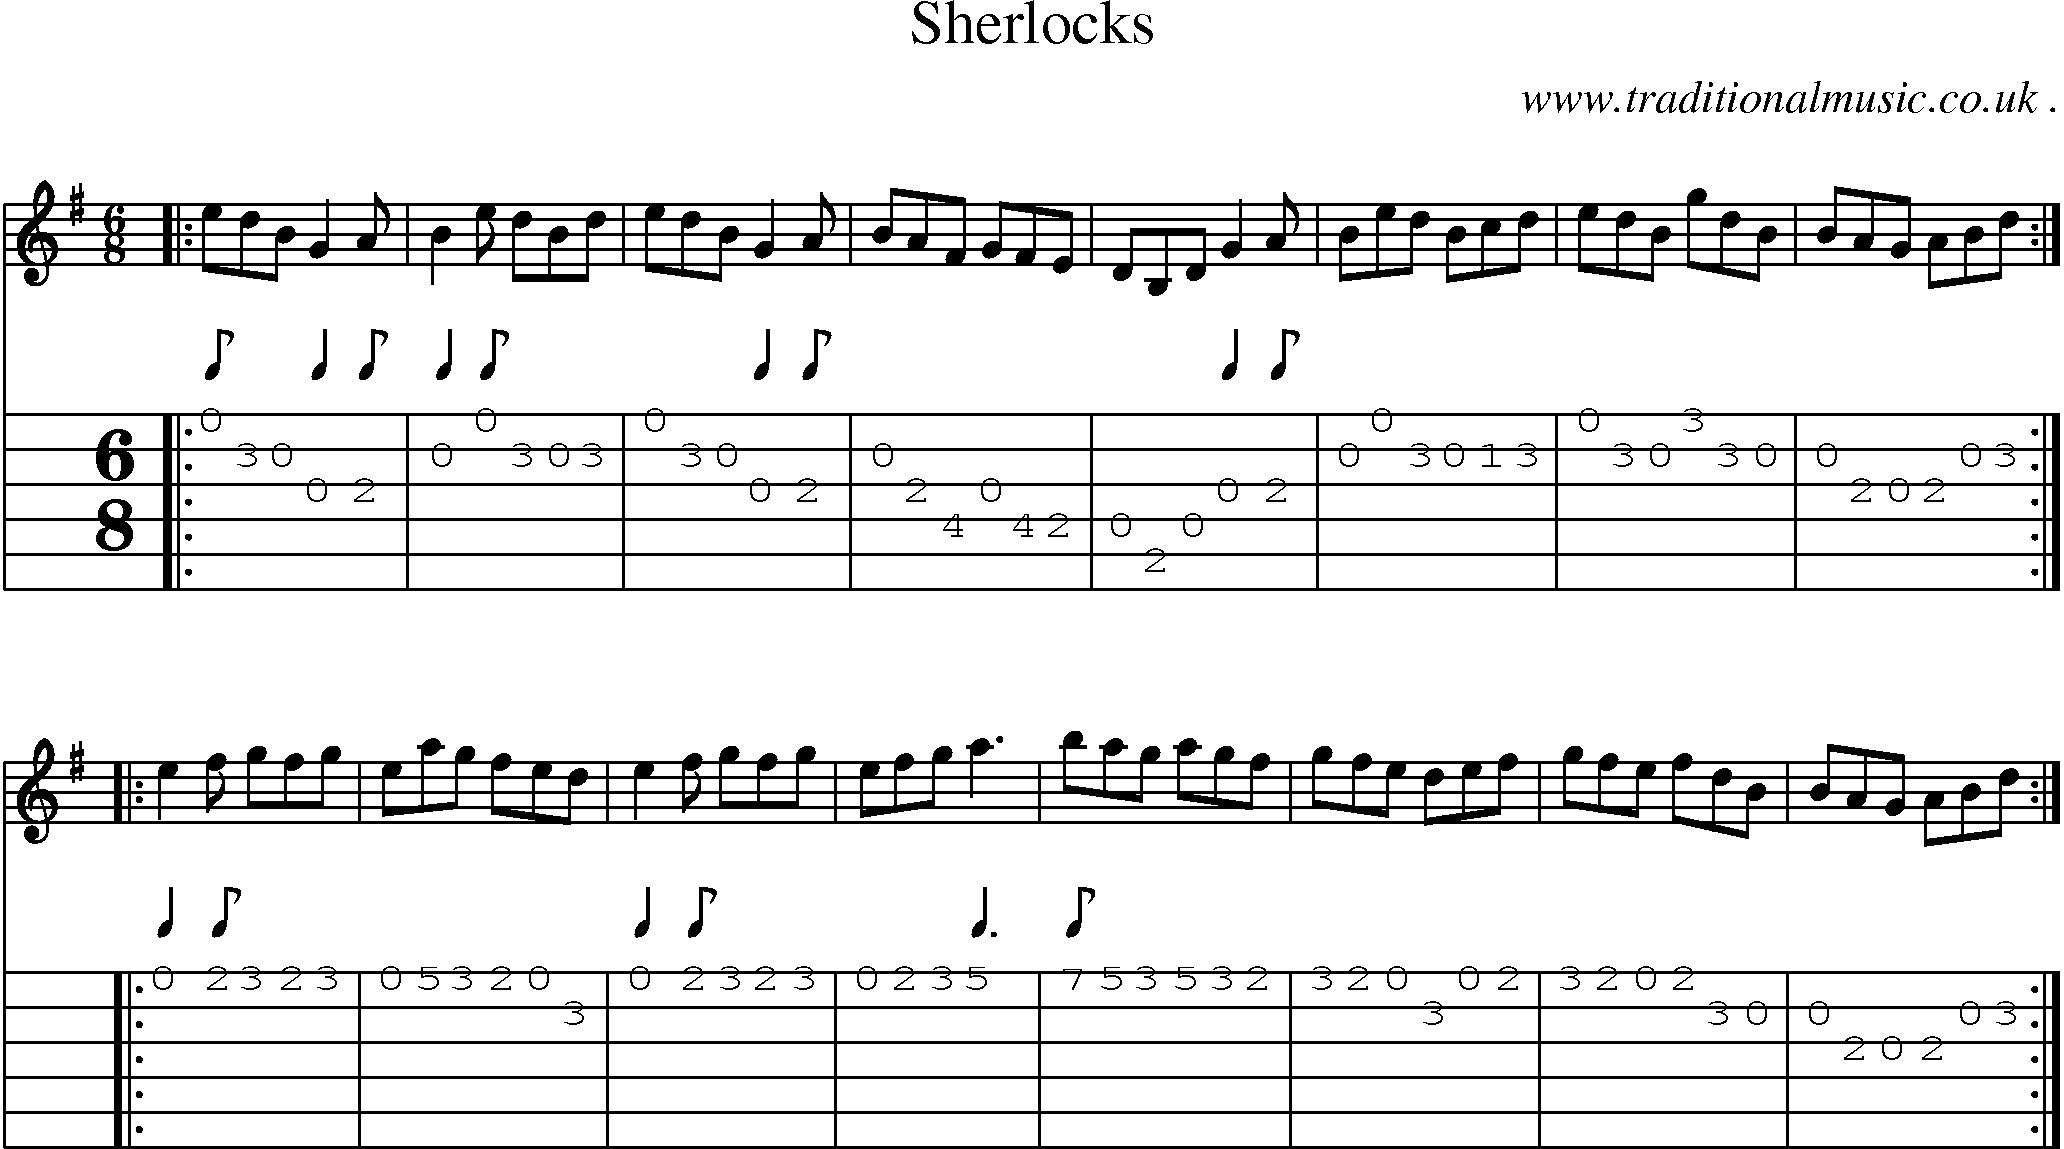 Sheet-Music and Guitar Tabs for Sherlocks